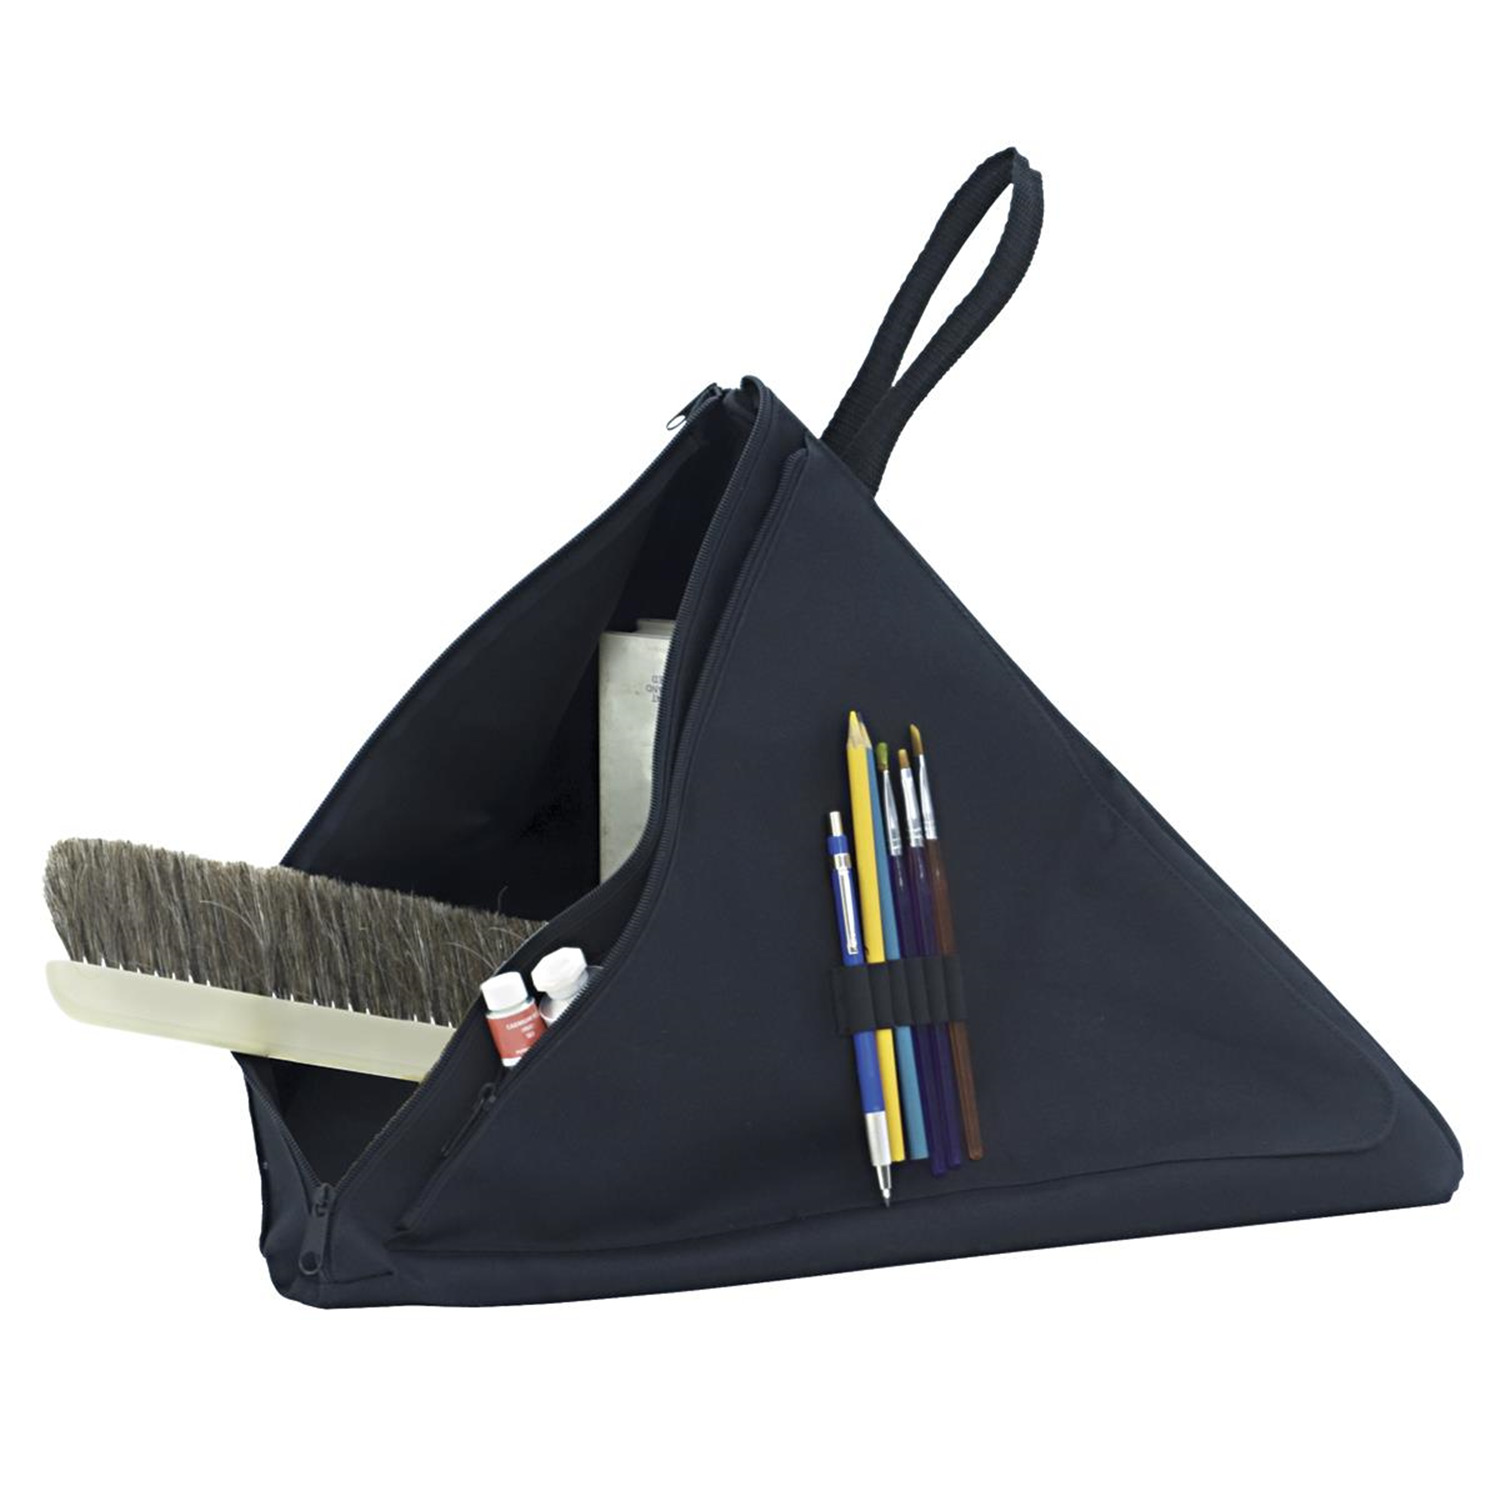 Studio Designs Pyramid Art Supplies Organization, Hanging Storage Bag with Zipper, Black (16" W)- 18698 - image 1 of 4